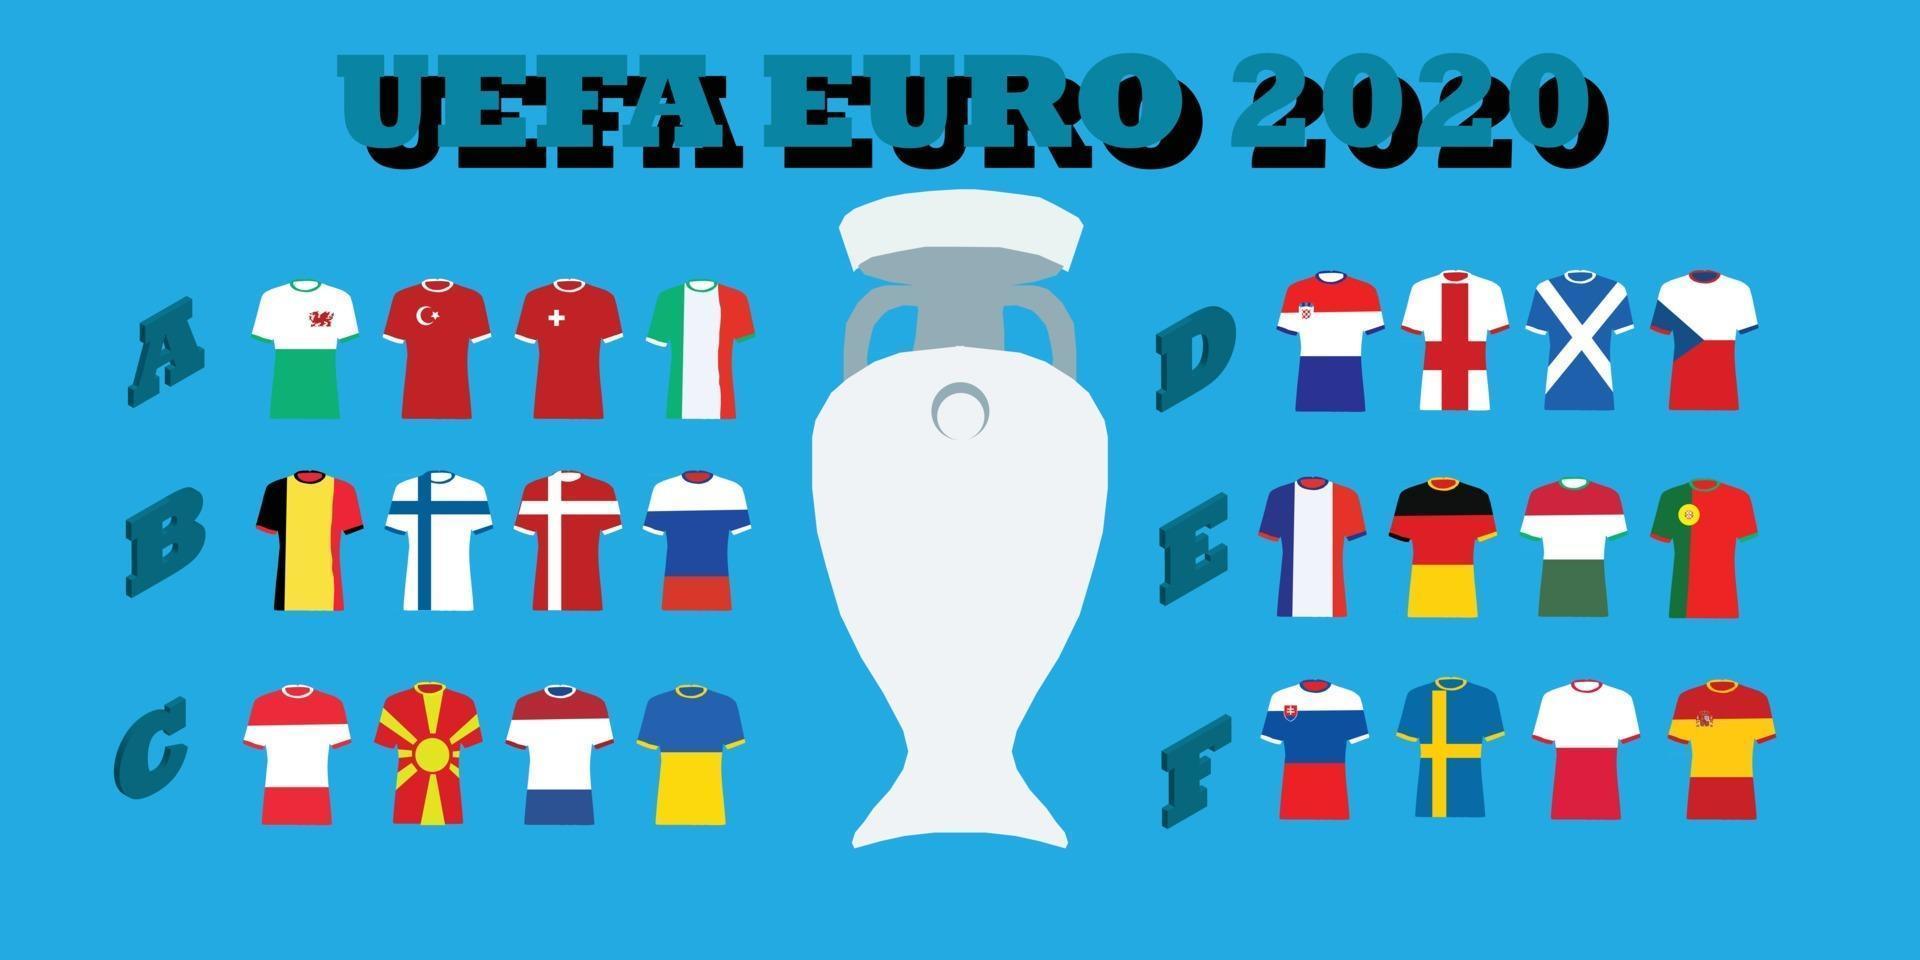 UEFA Euro 2020 Tournament vector